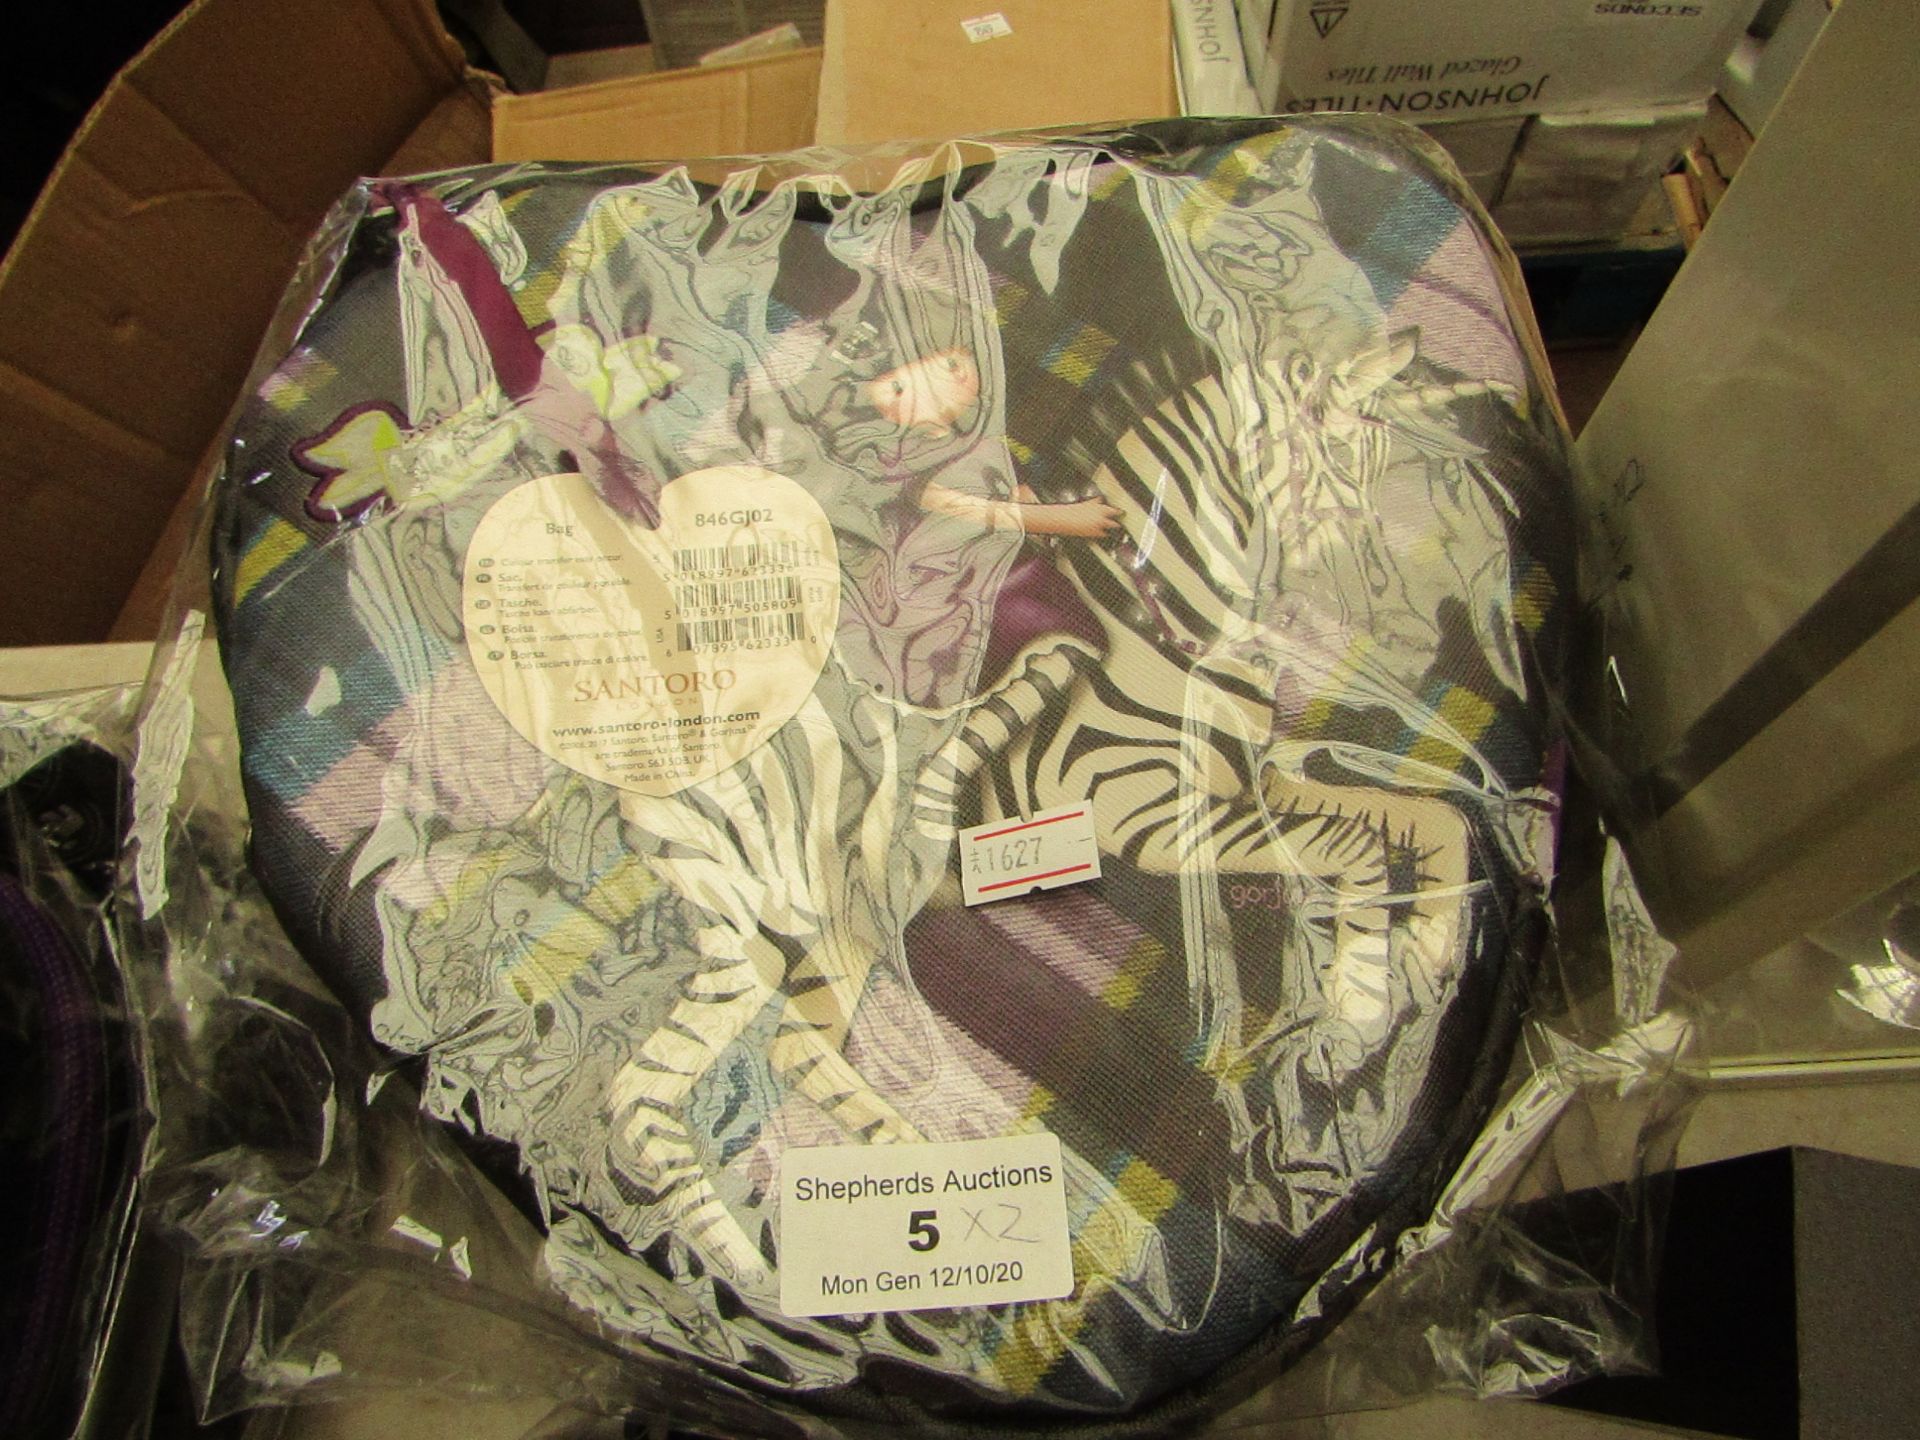 2 x Santoro London Heart Shaped Bags. 846GJ02. New & Packaged